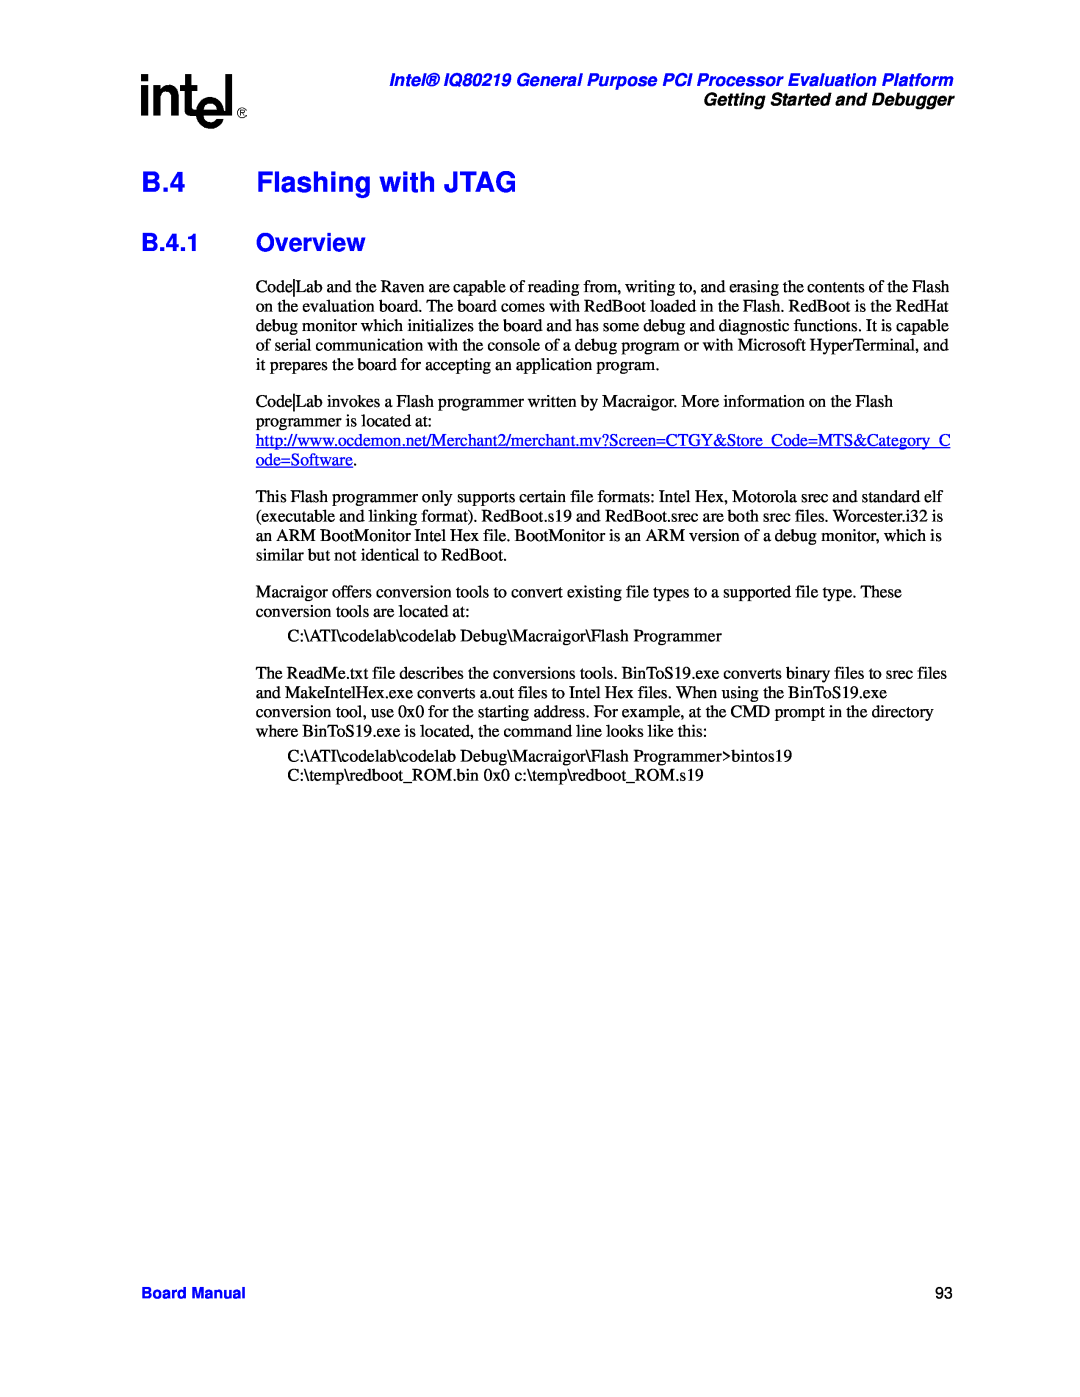 Intel manual B.4 Flashing with JTAG, B.4.1 Overview, Intel IQ80219 General Purpose PCI Processor Evaluation Platform 